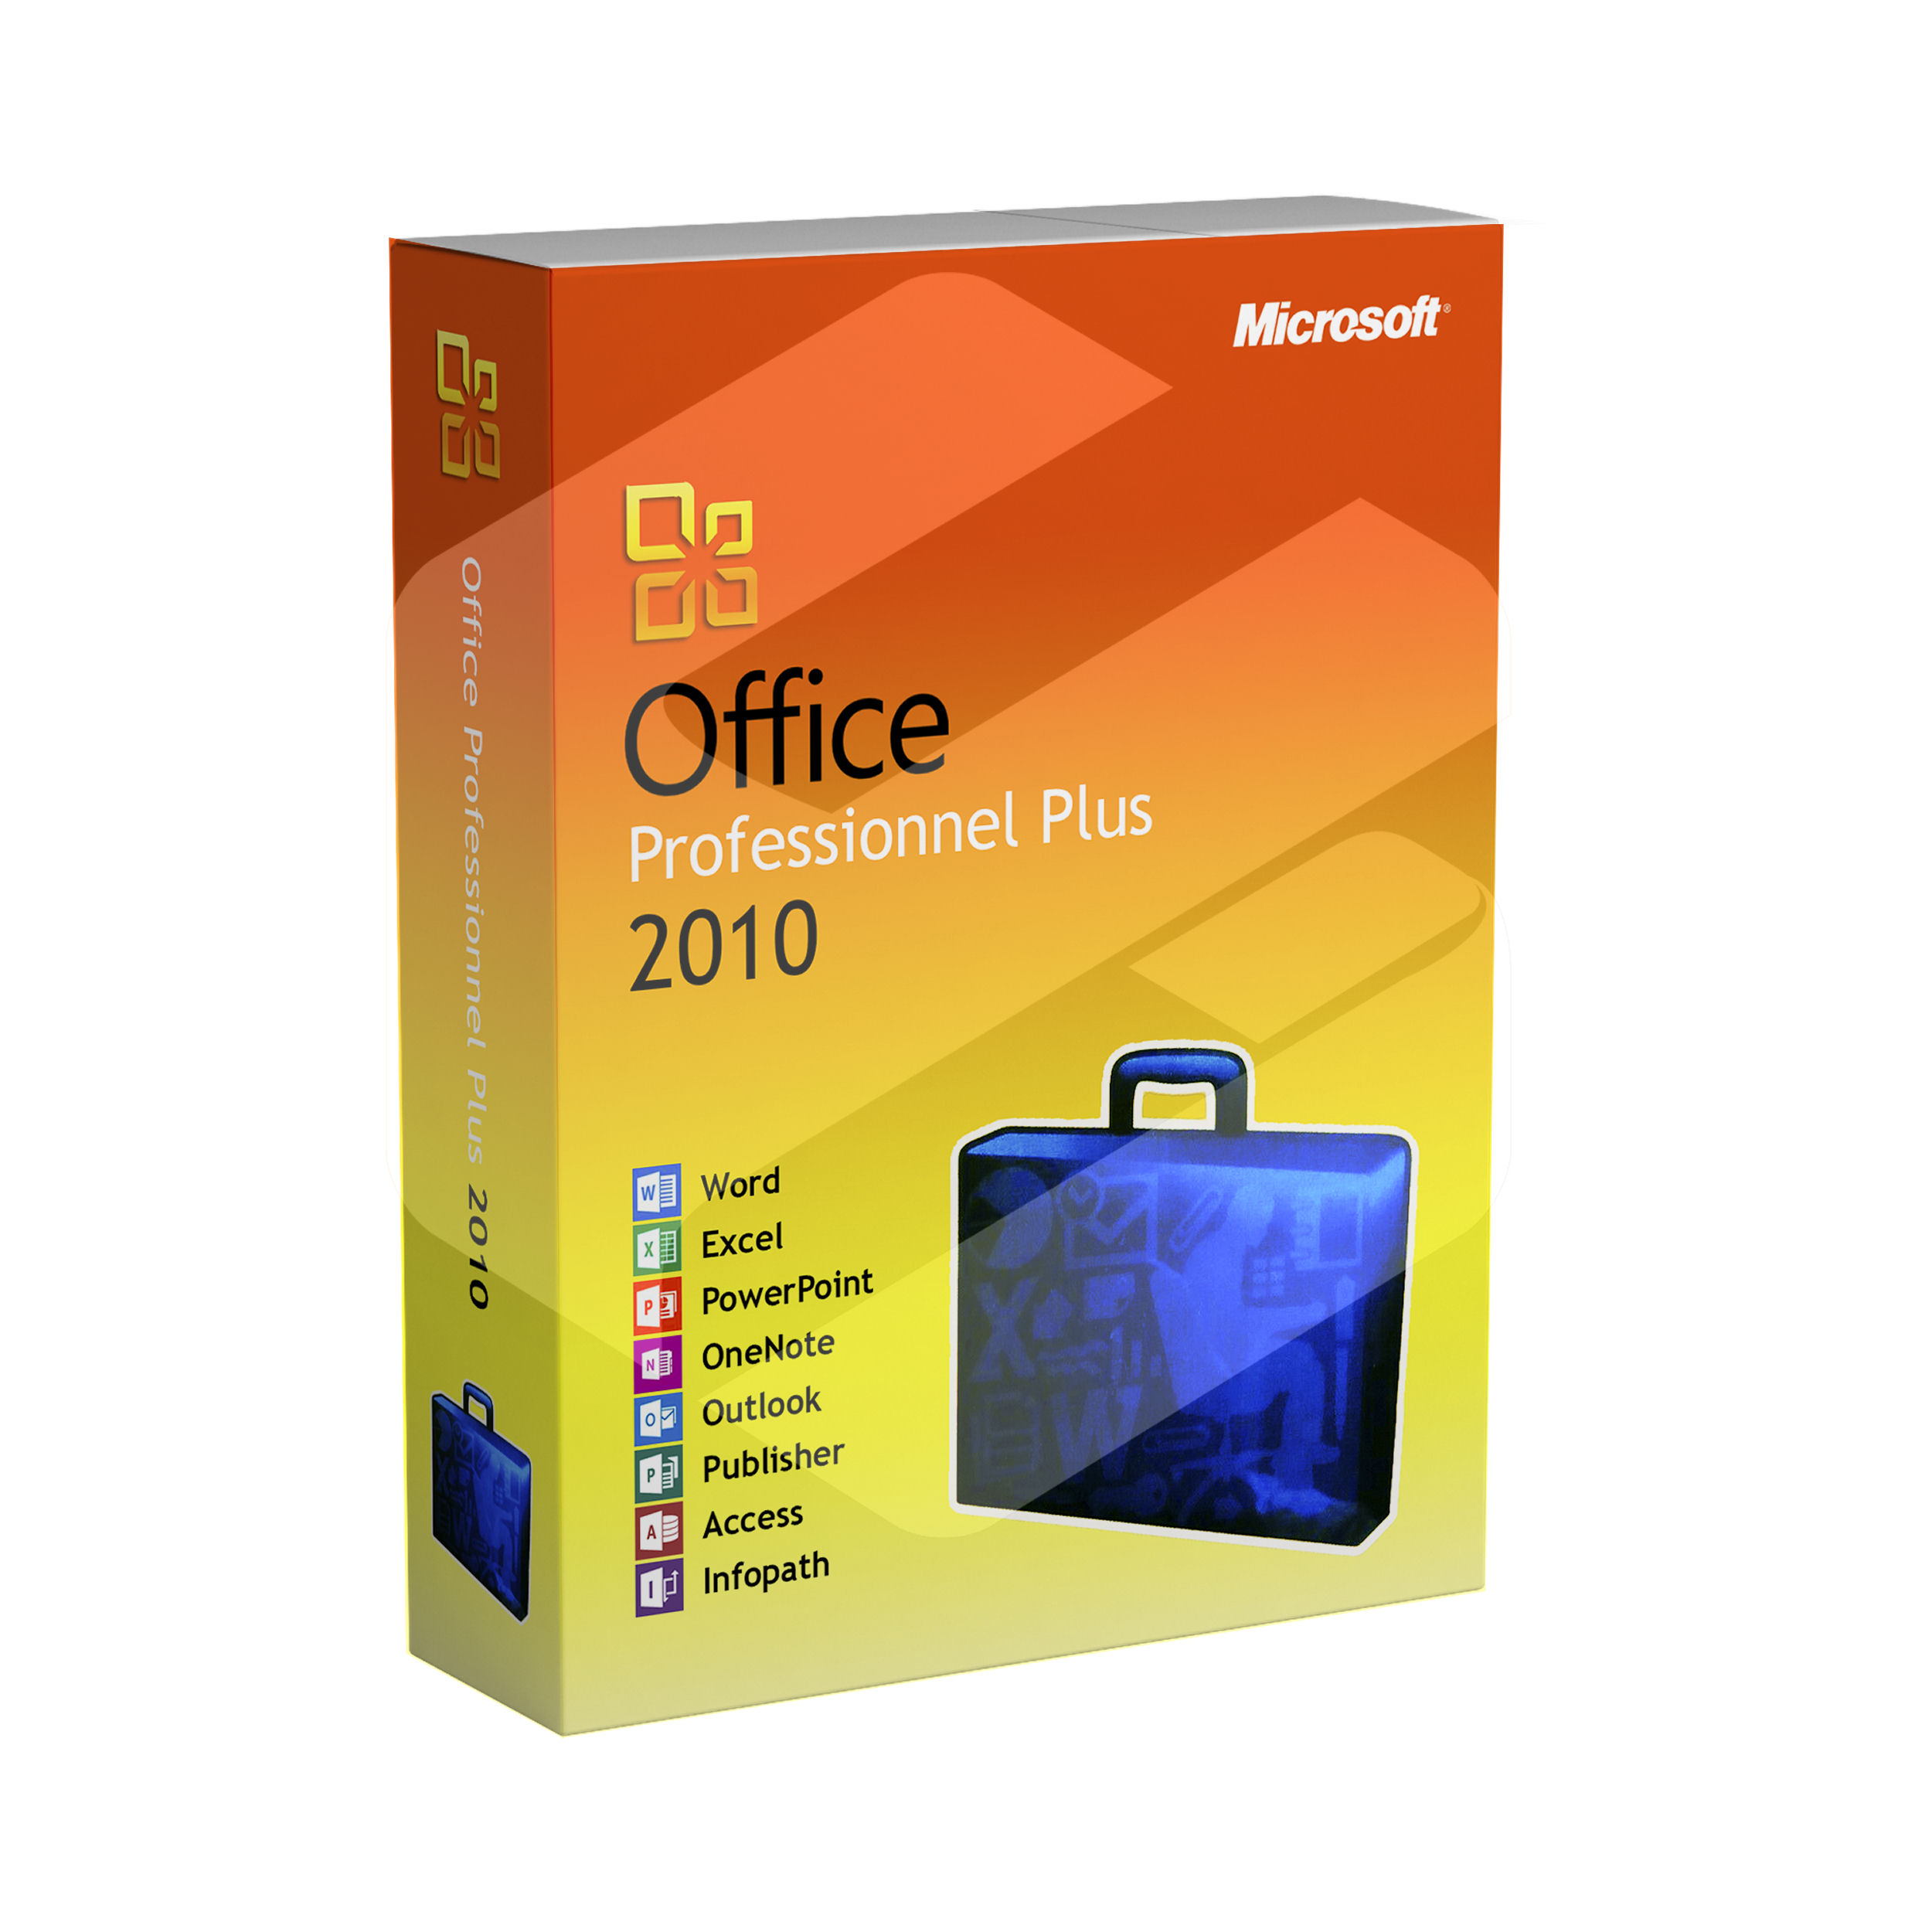 Microsoft Office 2010 Professionnel Plus